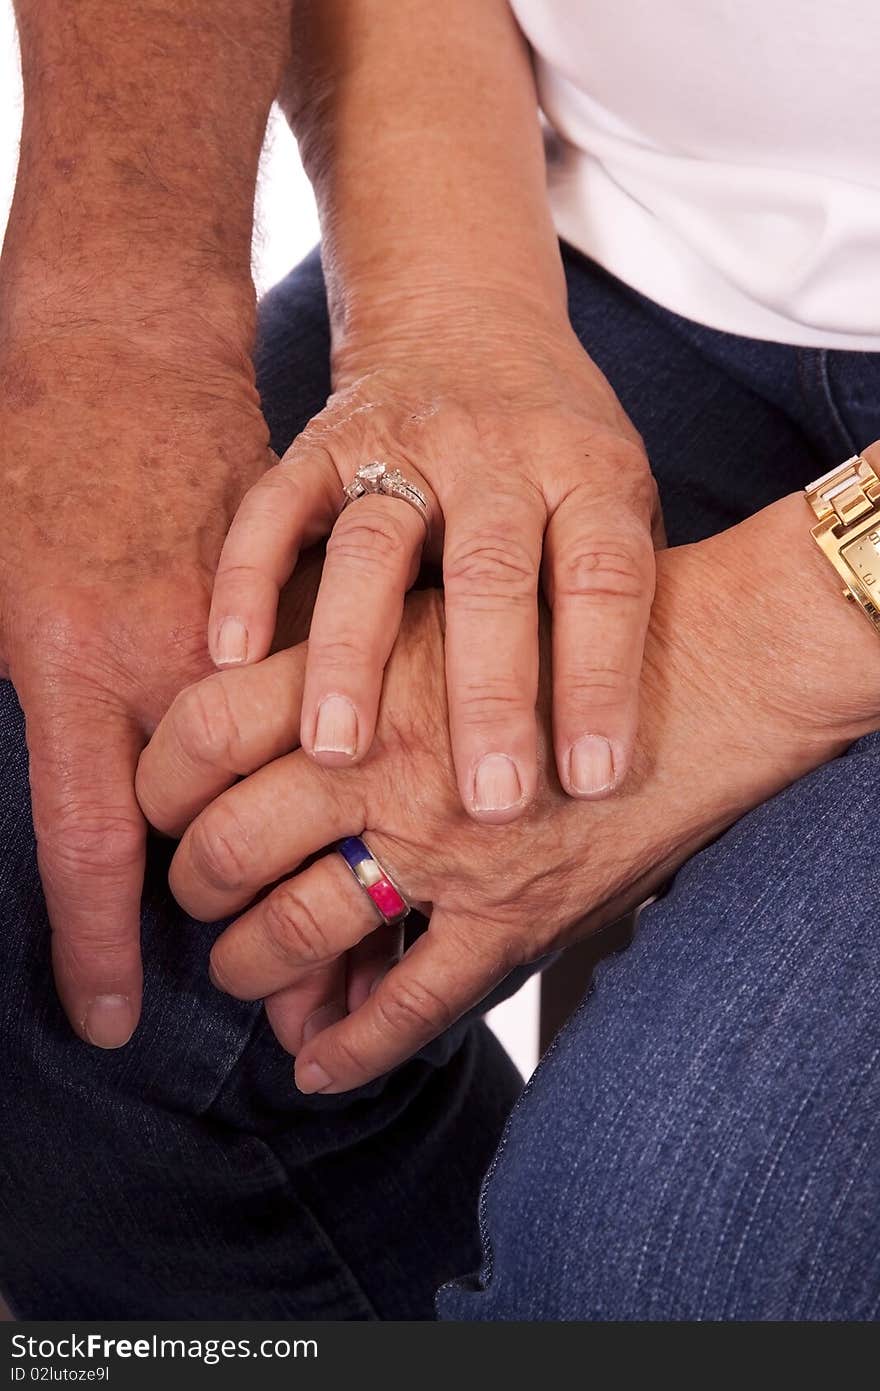 Elderly couple hands, together. Showing both hands and all its wrinkles. Elderly couple hands, together. Showing both hands and all its wrinkles